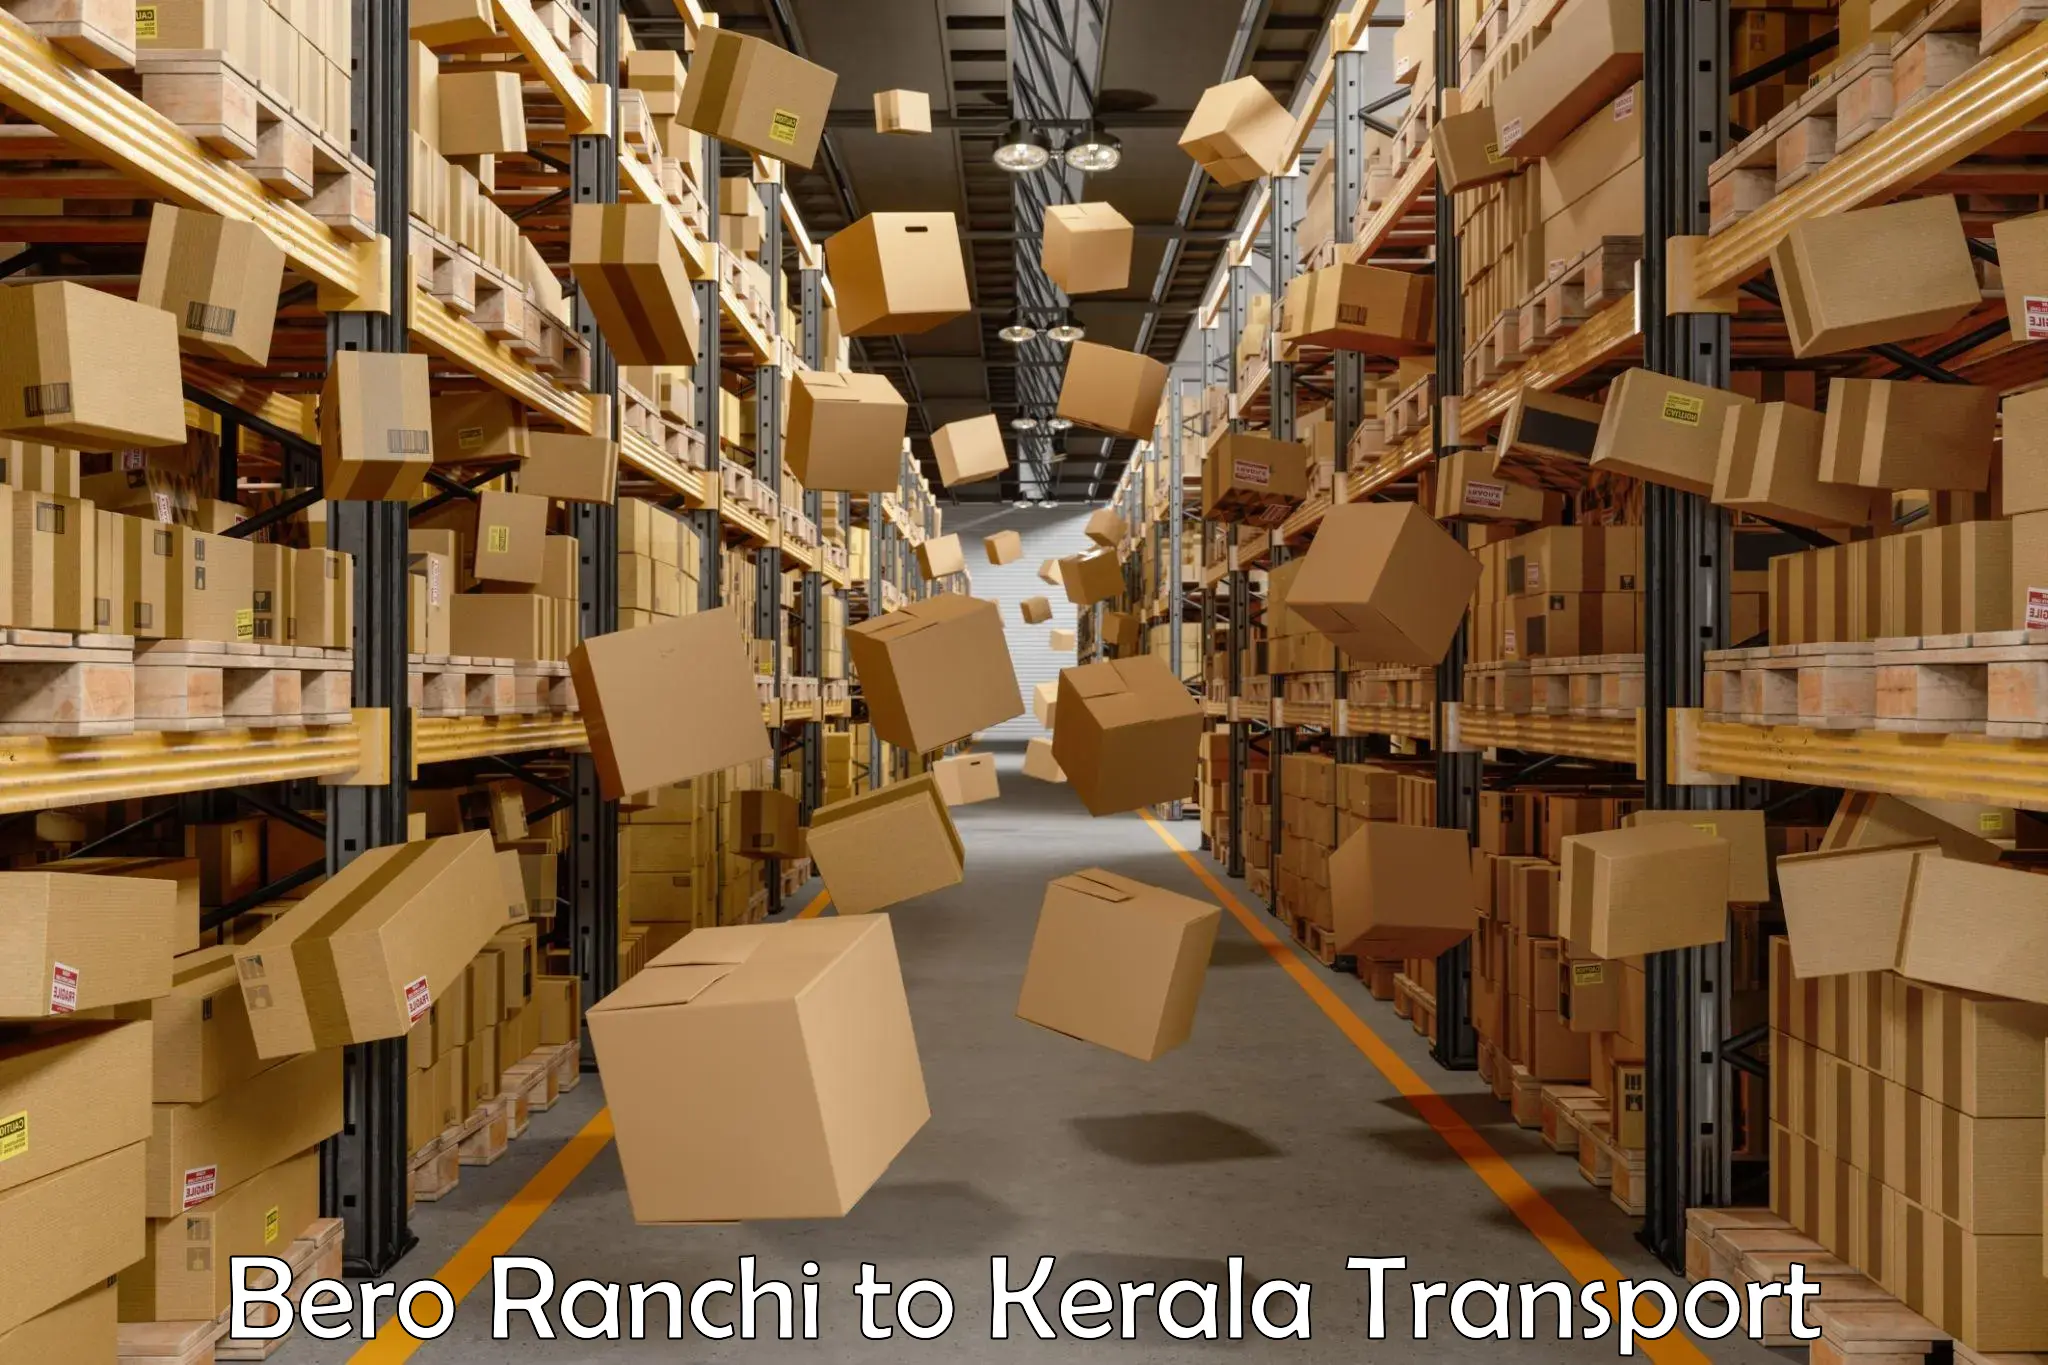 Transport in sharing Bero Ranchi to Palakkad